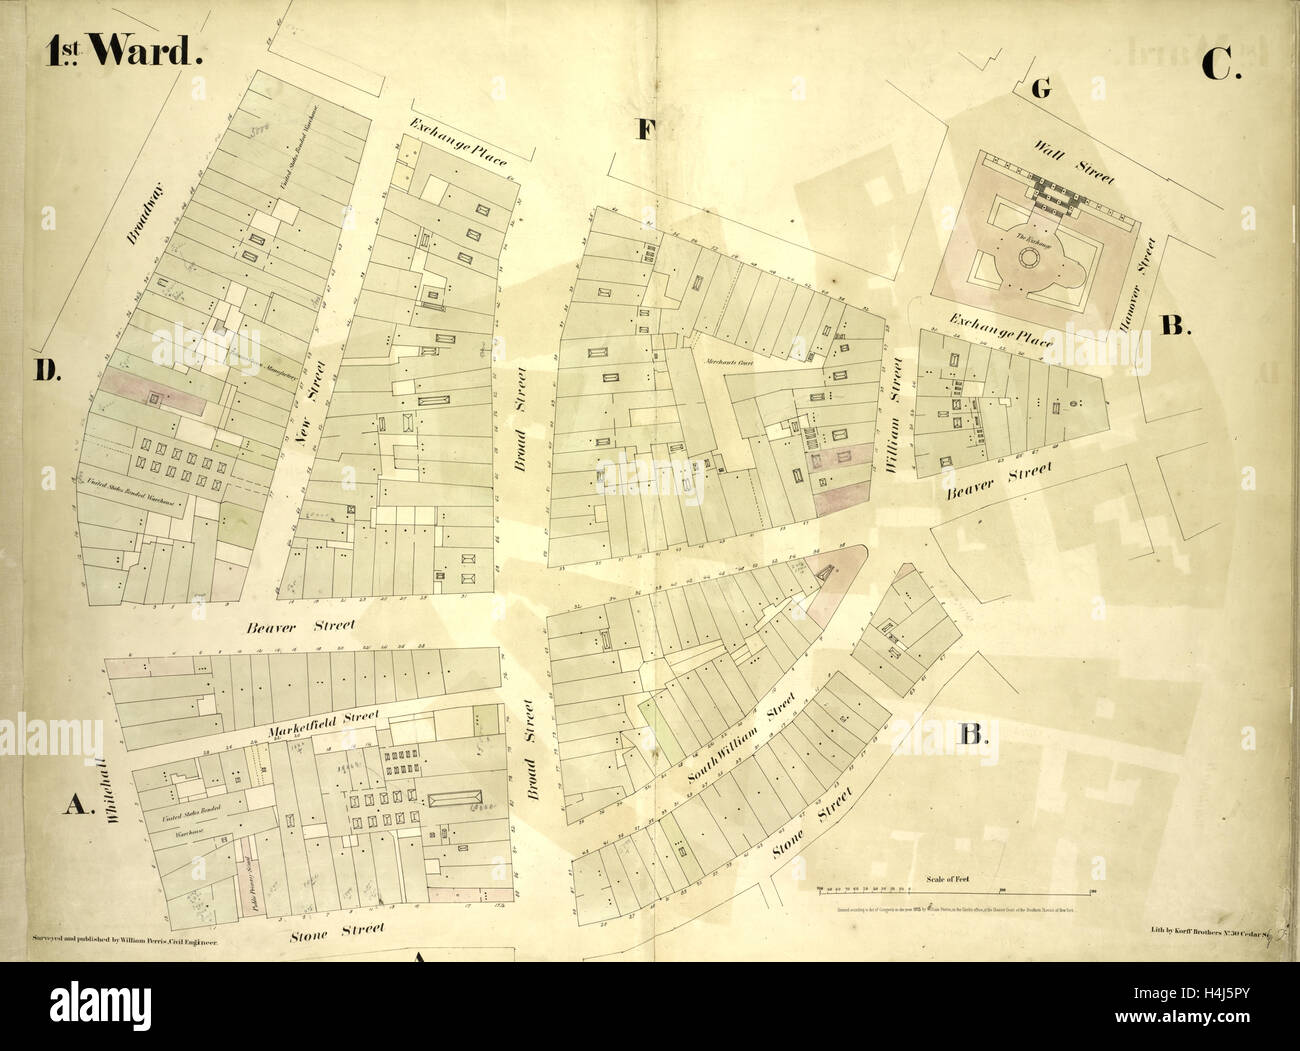 1 Ward. Piastra C: mappa delimitata da Exchange Place, William Street, Wall Street, Hanover Street, Beaver Street, Stone Street Foto Stock